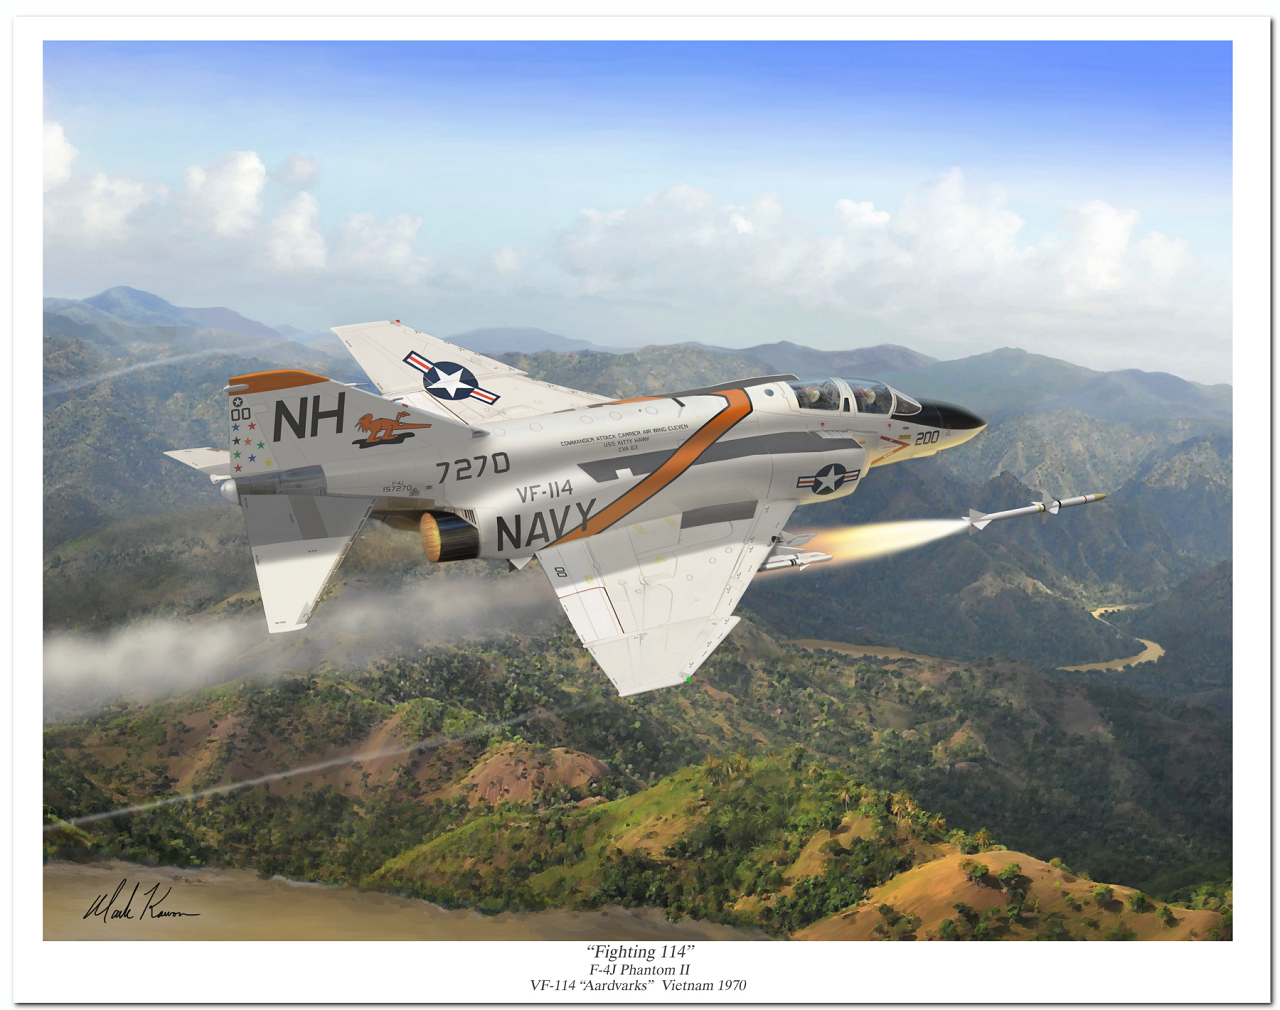 "Fighting 114" by Mark Karvon, featuring an F-4J Phantom II of the VF 114 Aardvarks